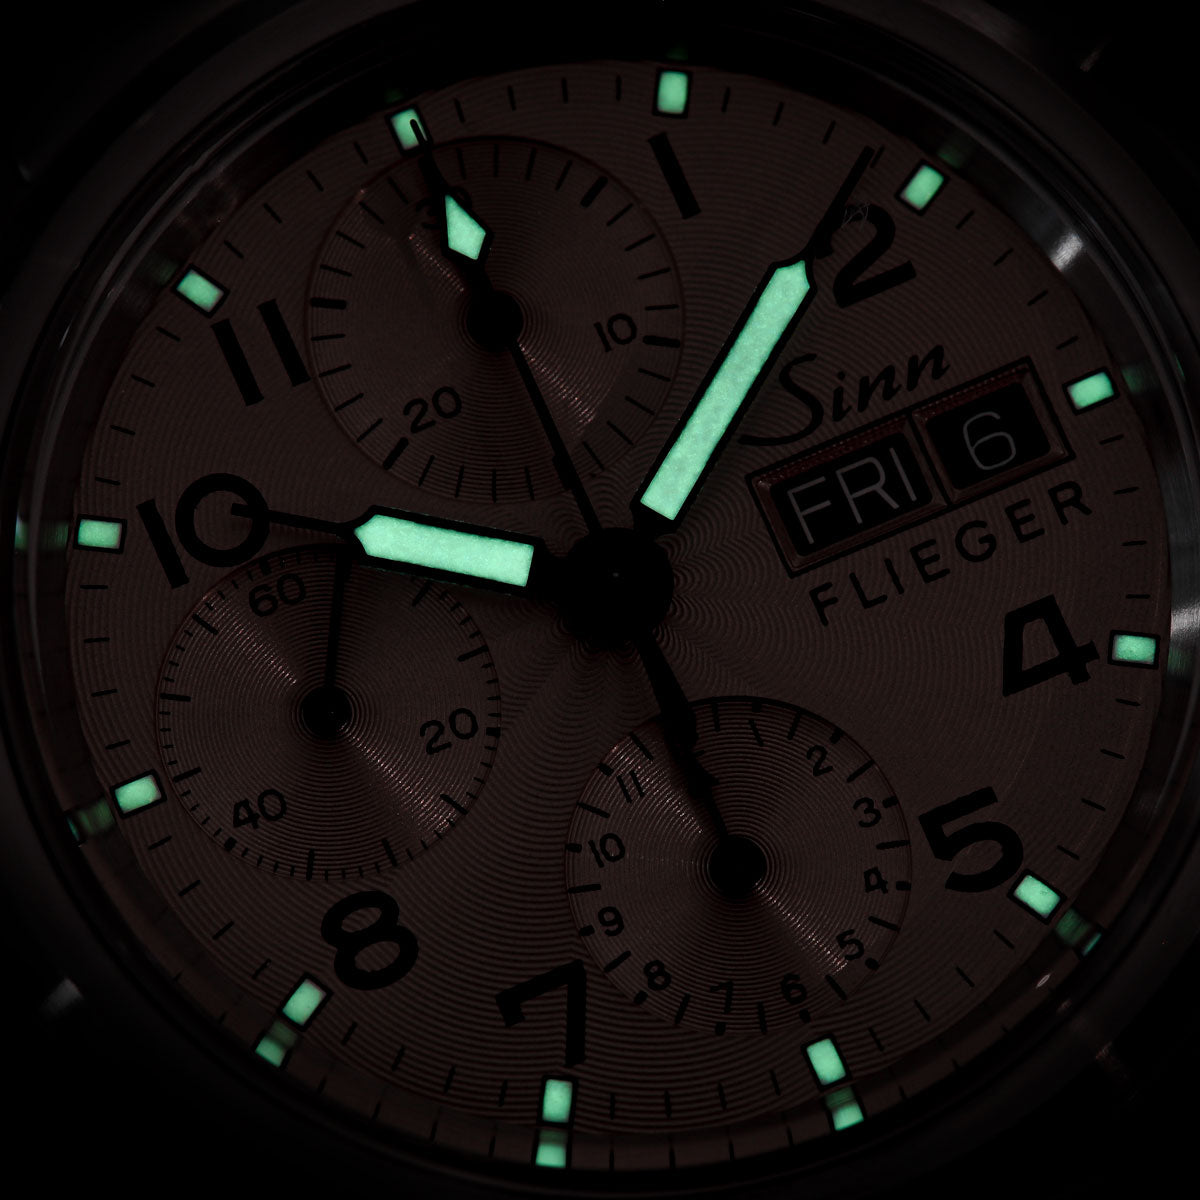 Sinn 356 Sa Pilot II Automatic Chronograph Watch